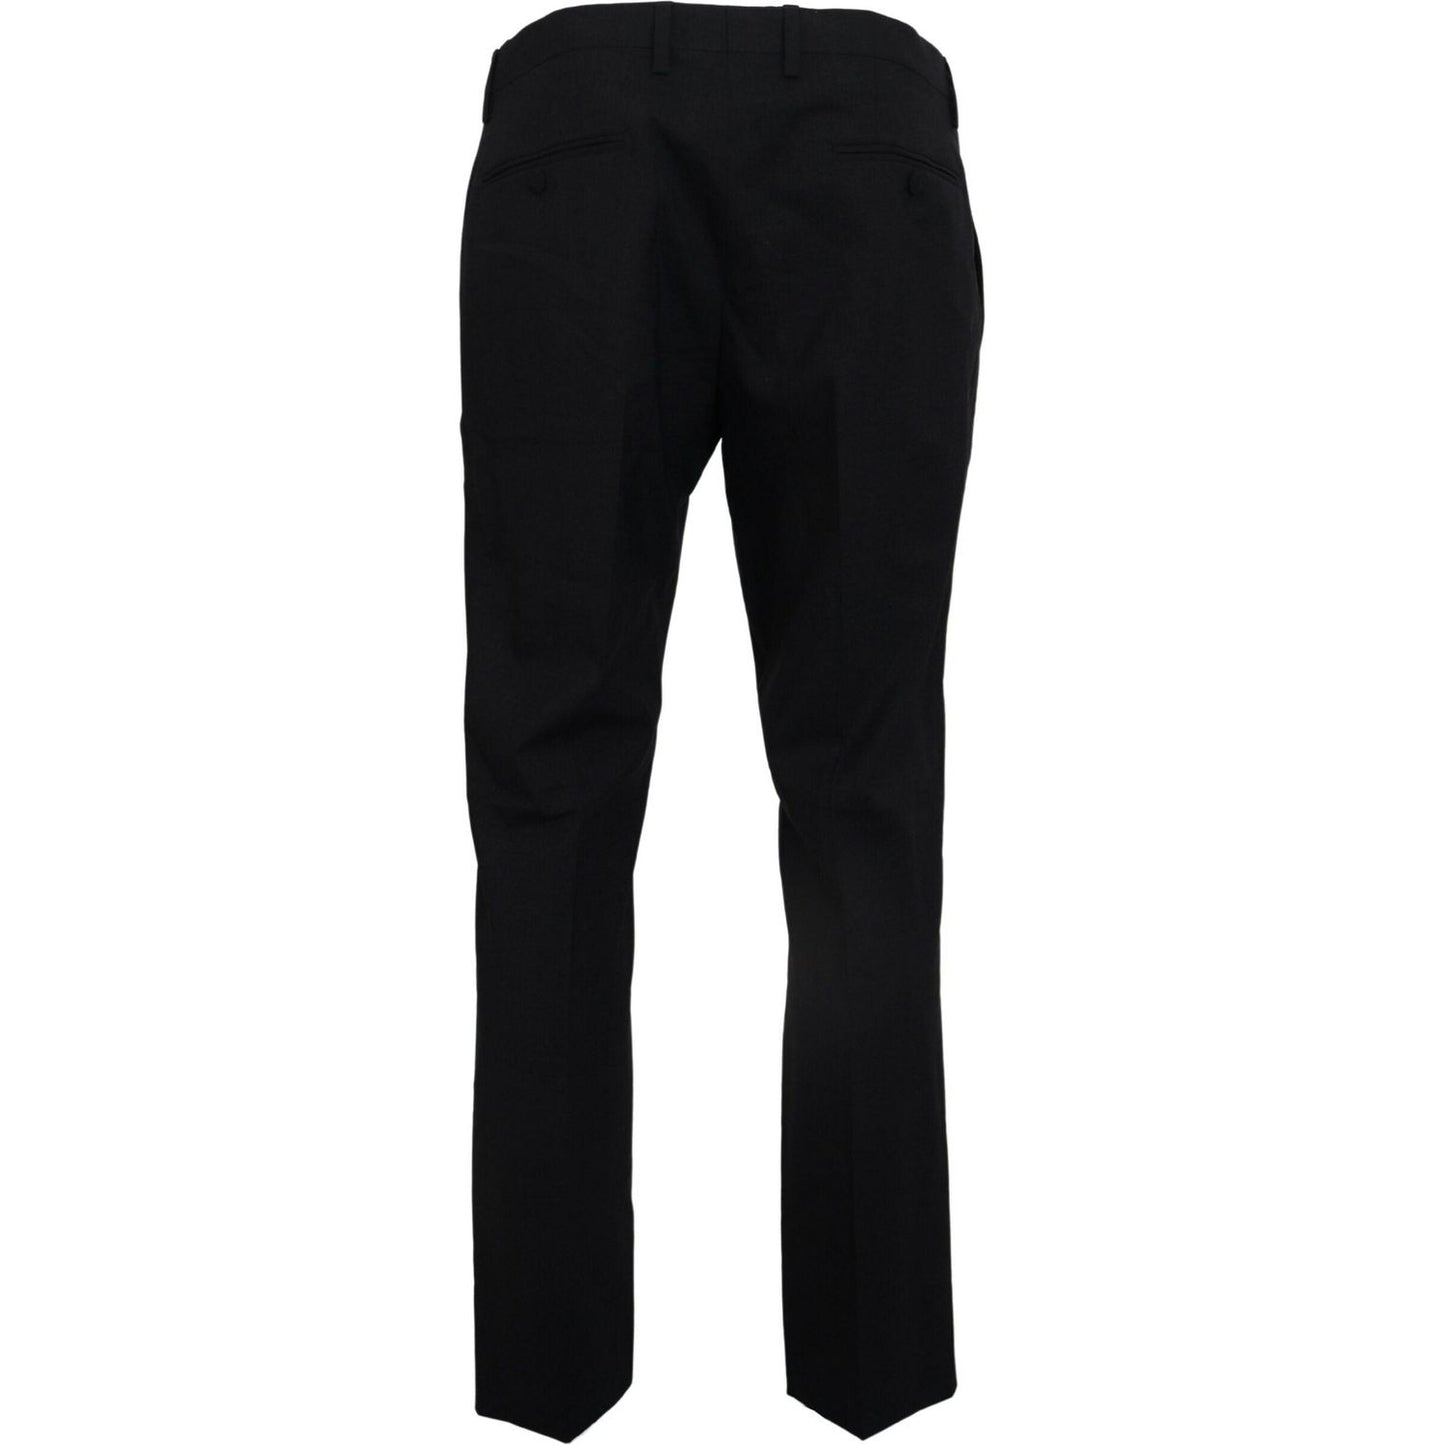 Dolce & Gabbana Elegant Slim Fit Dress Pants gray-wool-stretch-dress-formal-slim-fit-pant IMG_6415-scaled-daeff9dc-a52.jpg